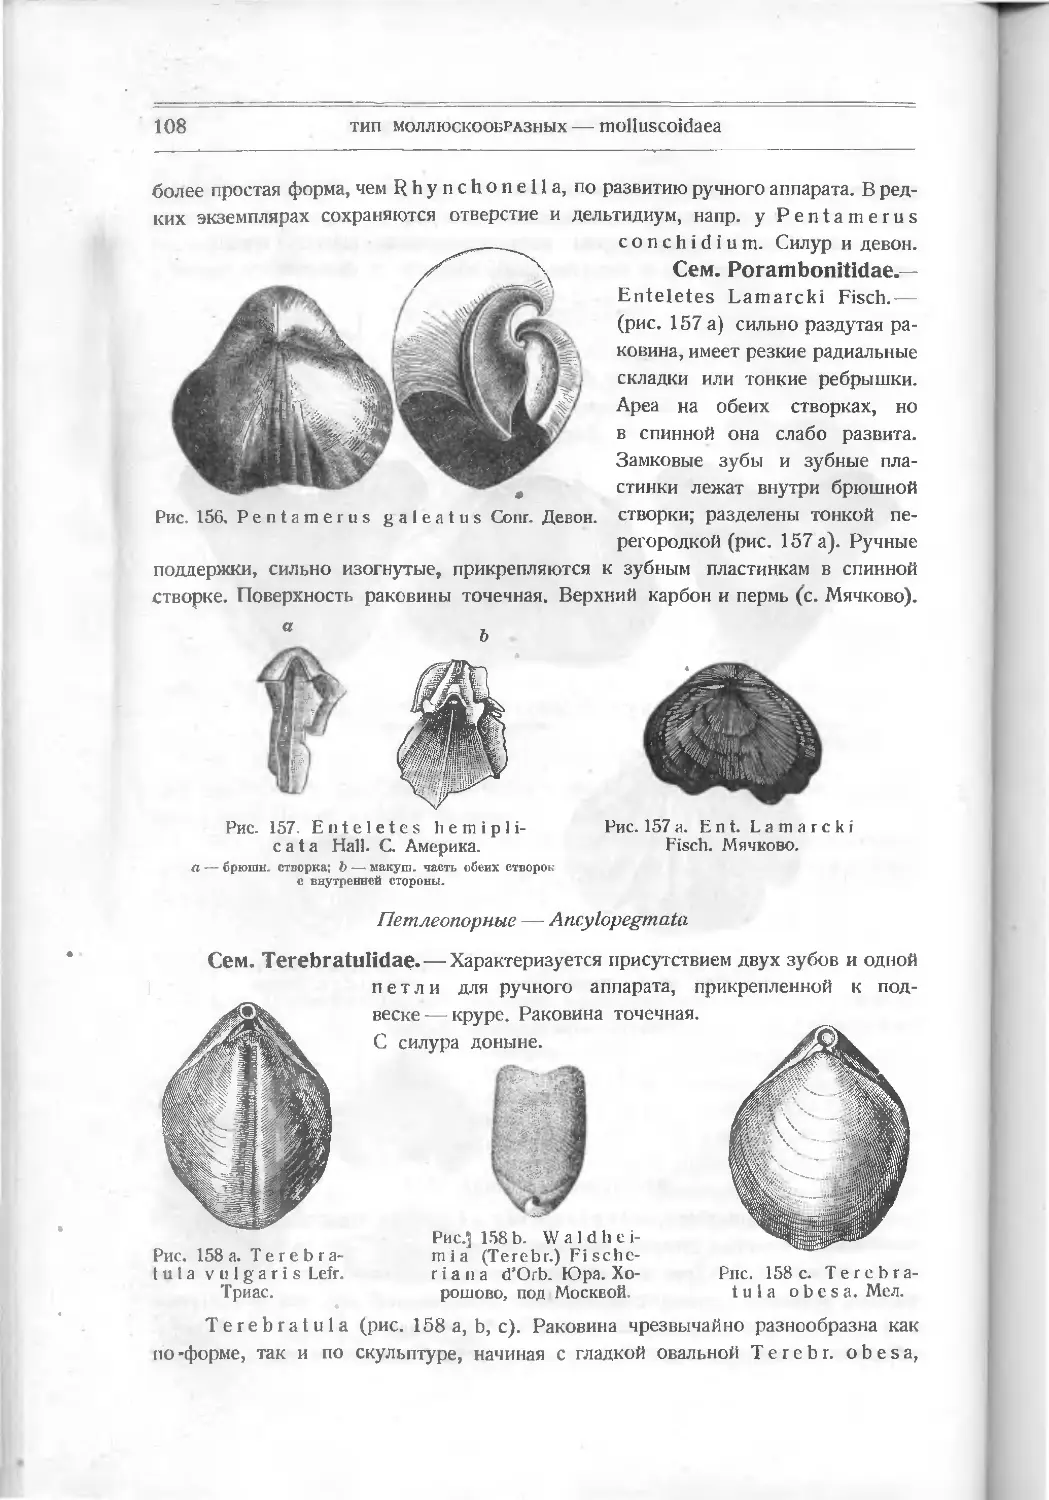 Петлеопорные – Ancylopegmata